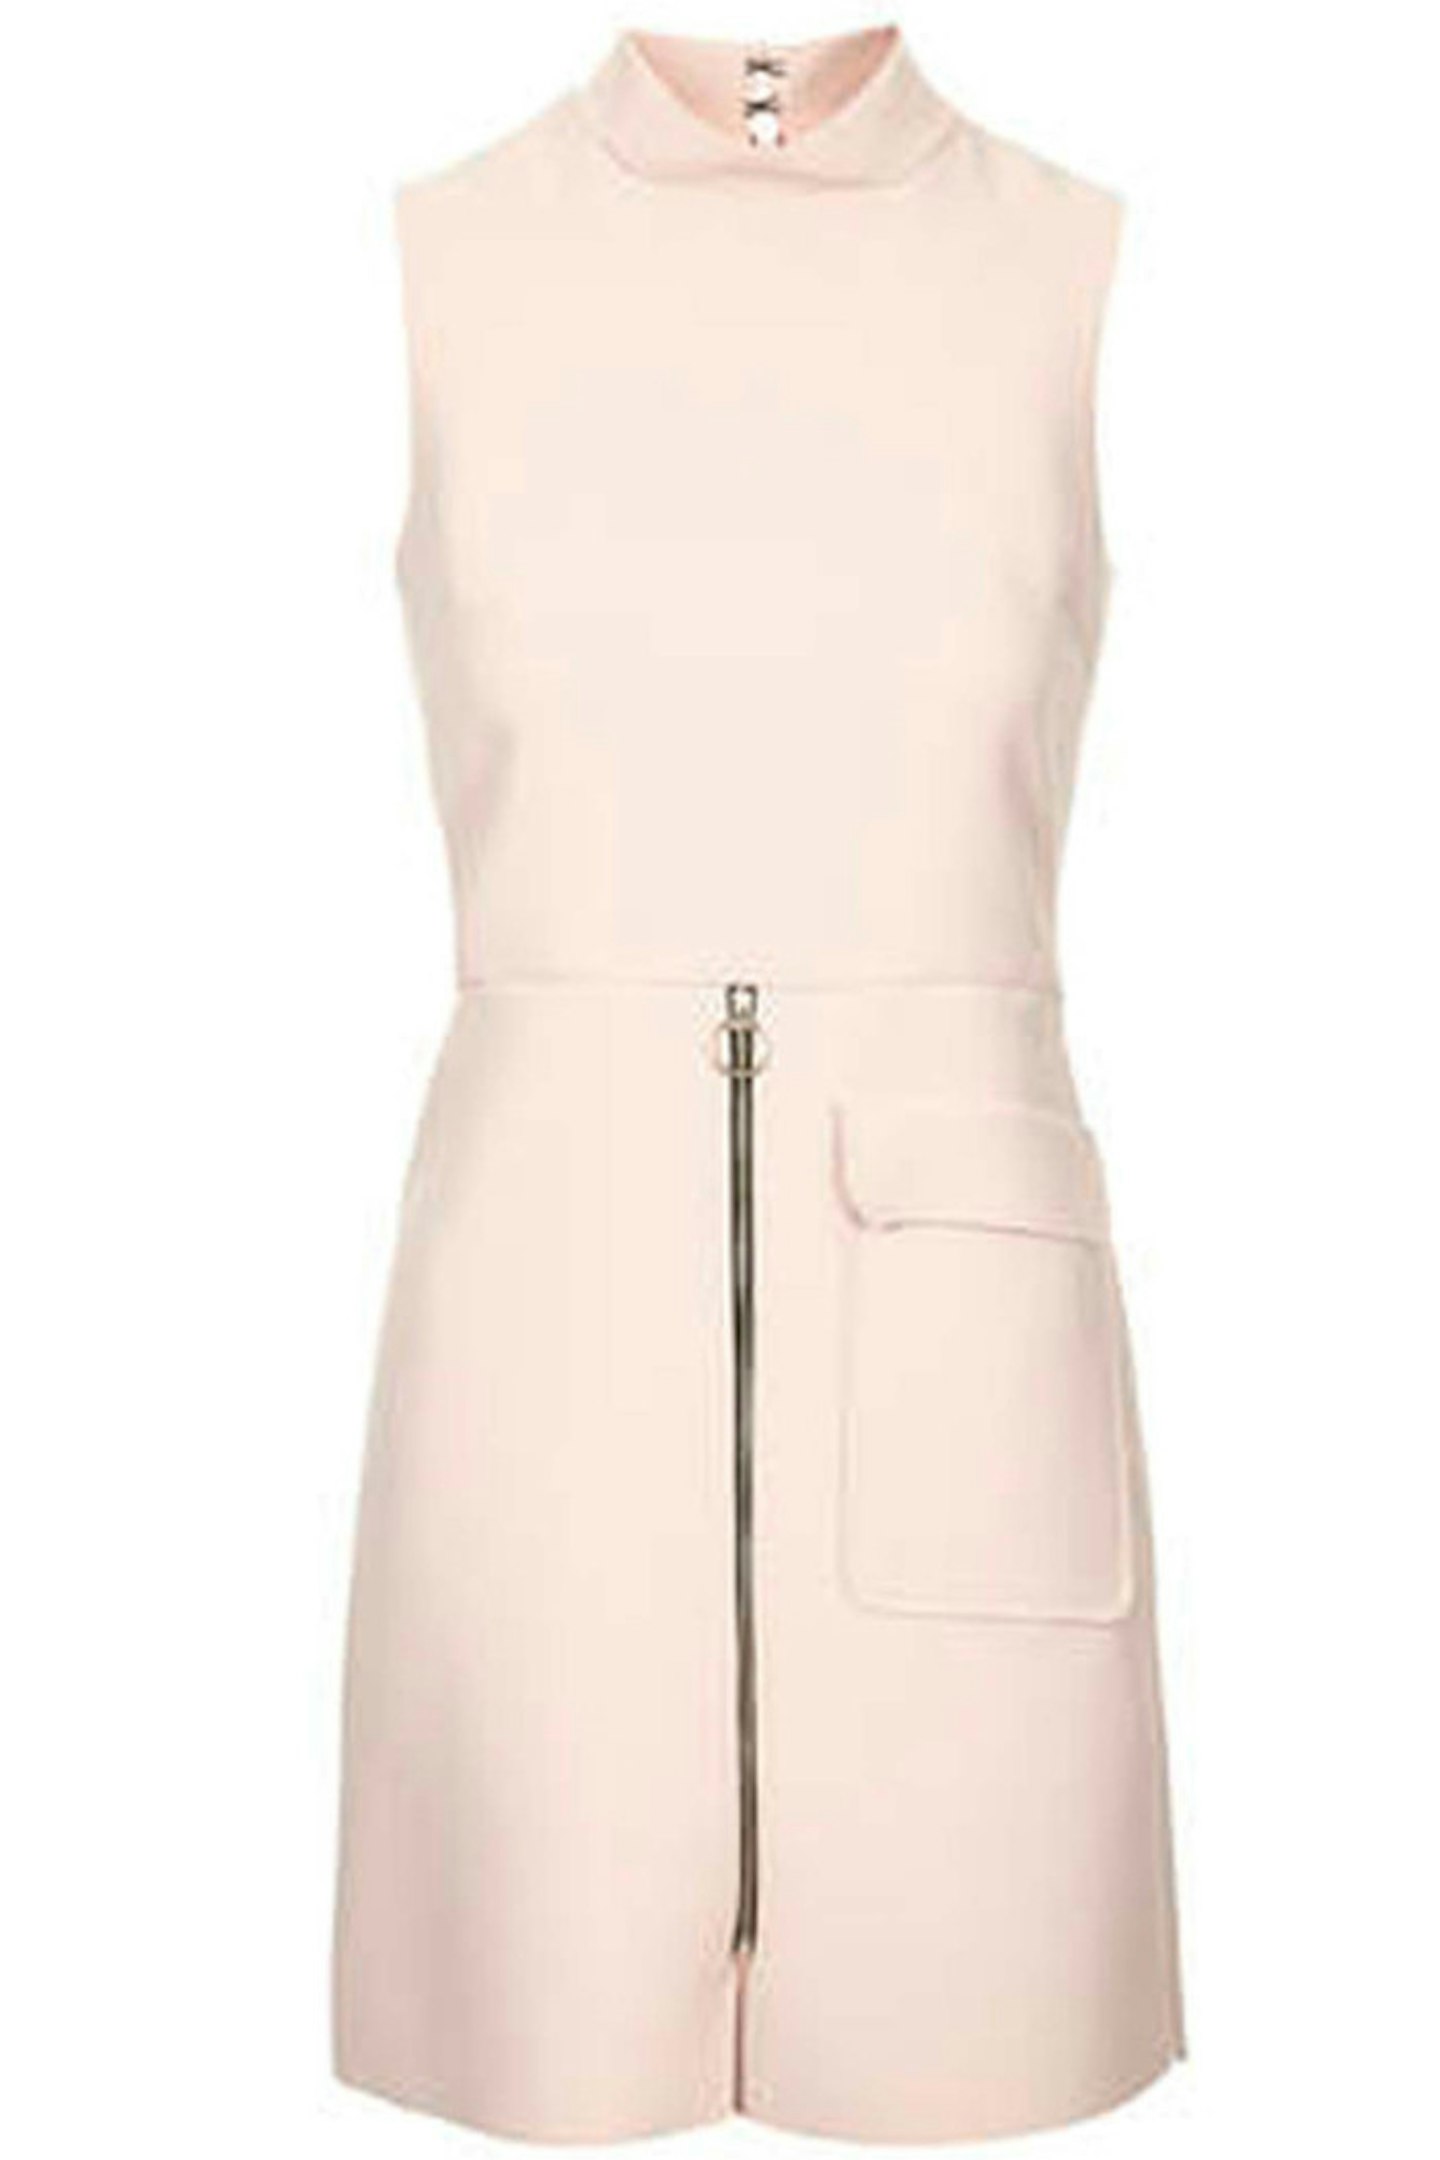 45. Pink high neck shift dress, £68, Topshop